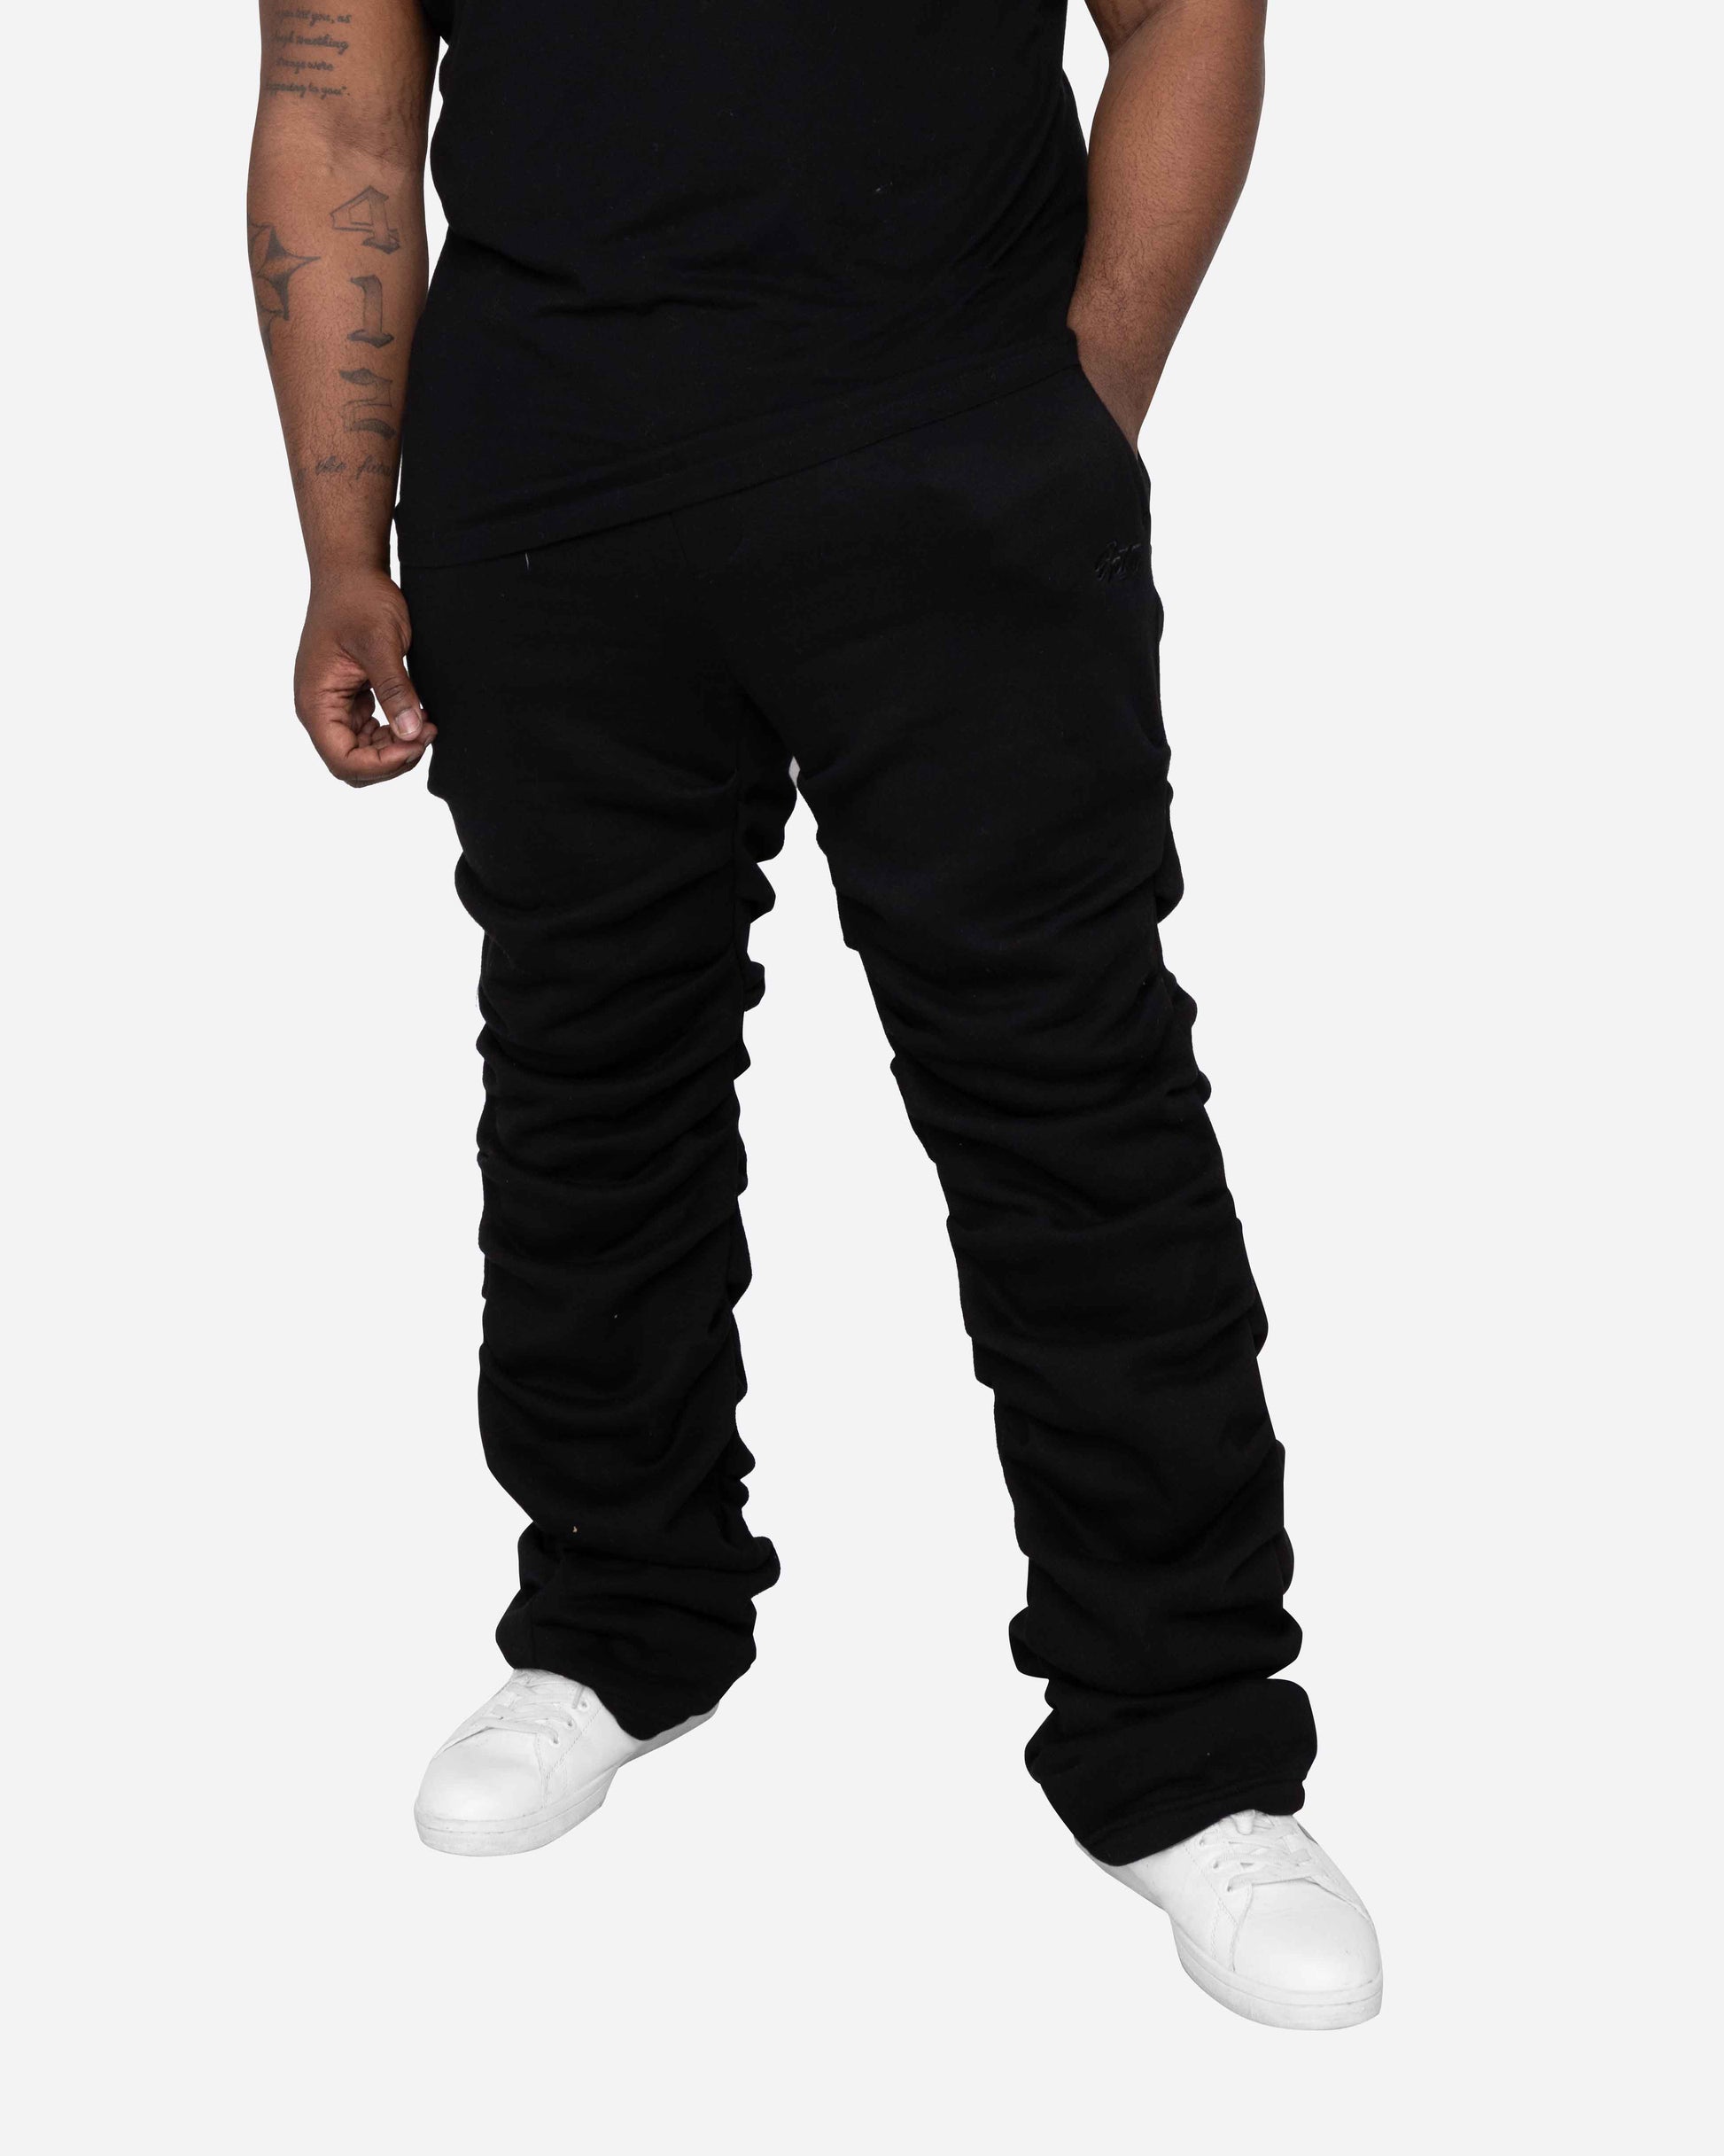 Big Apple Sweatpants (Black) – Pro Era